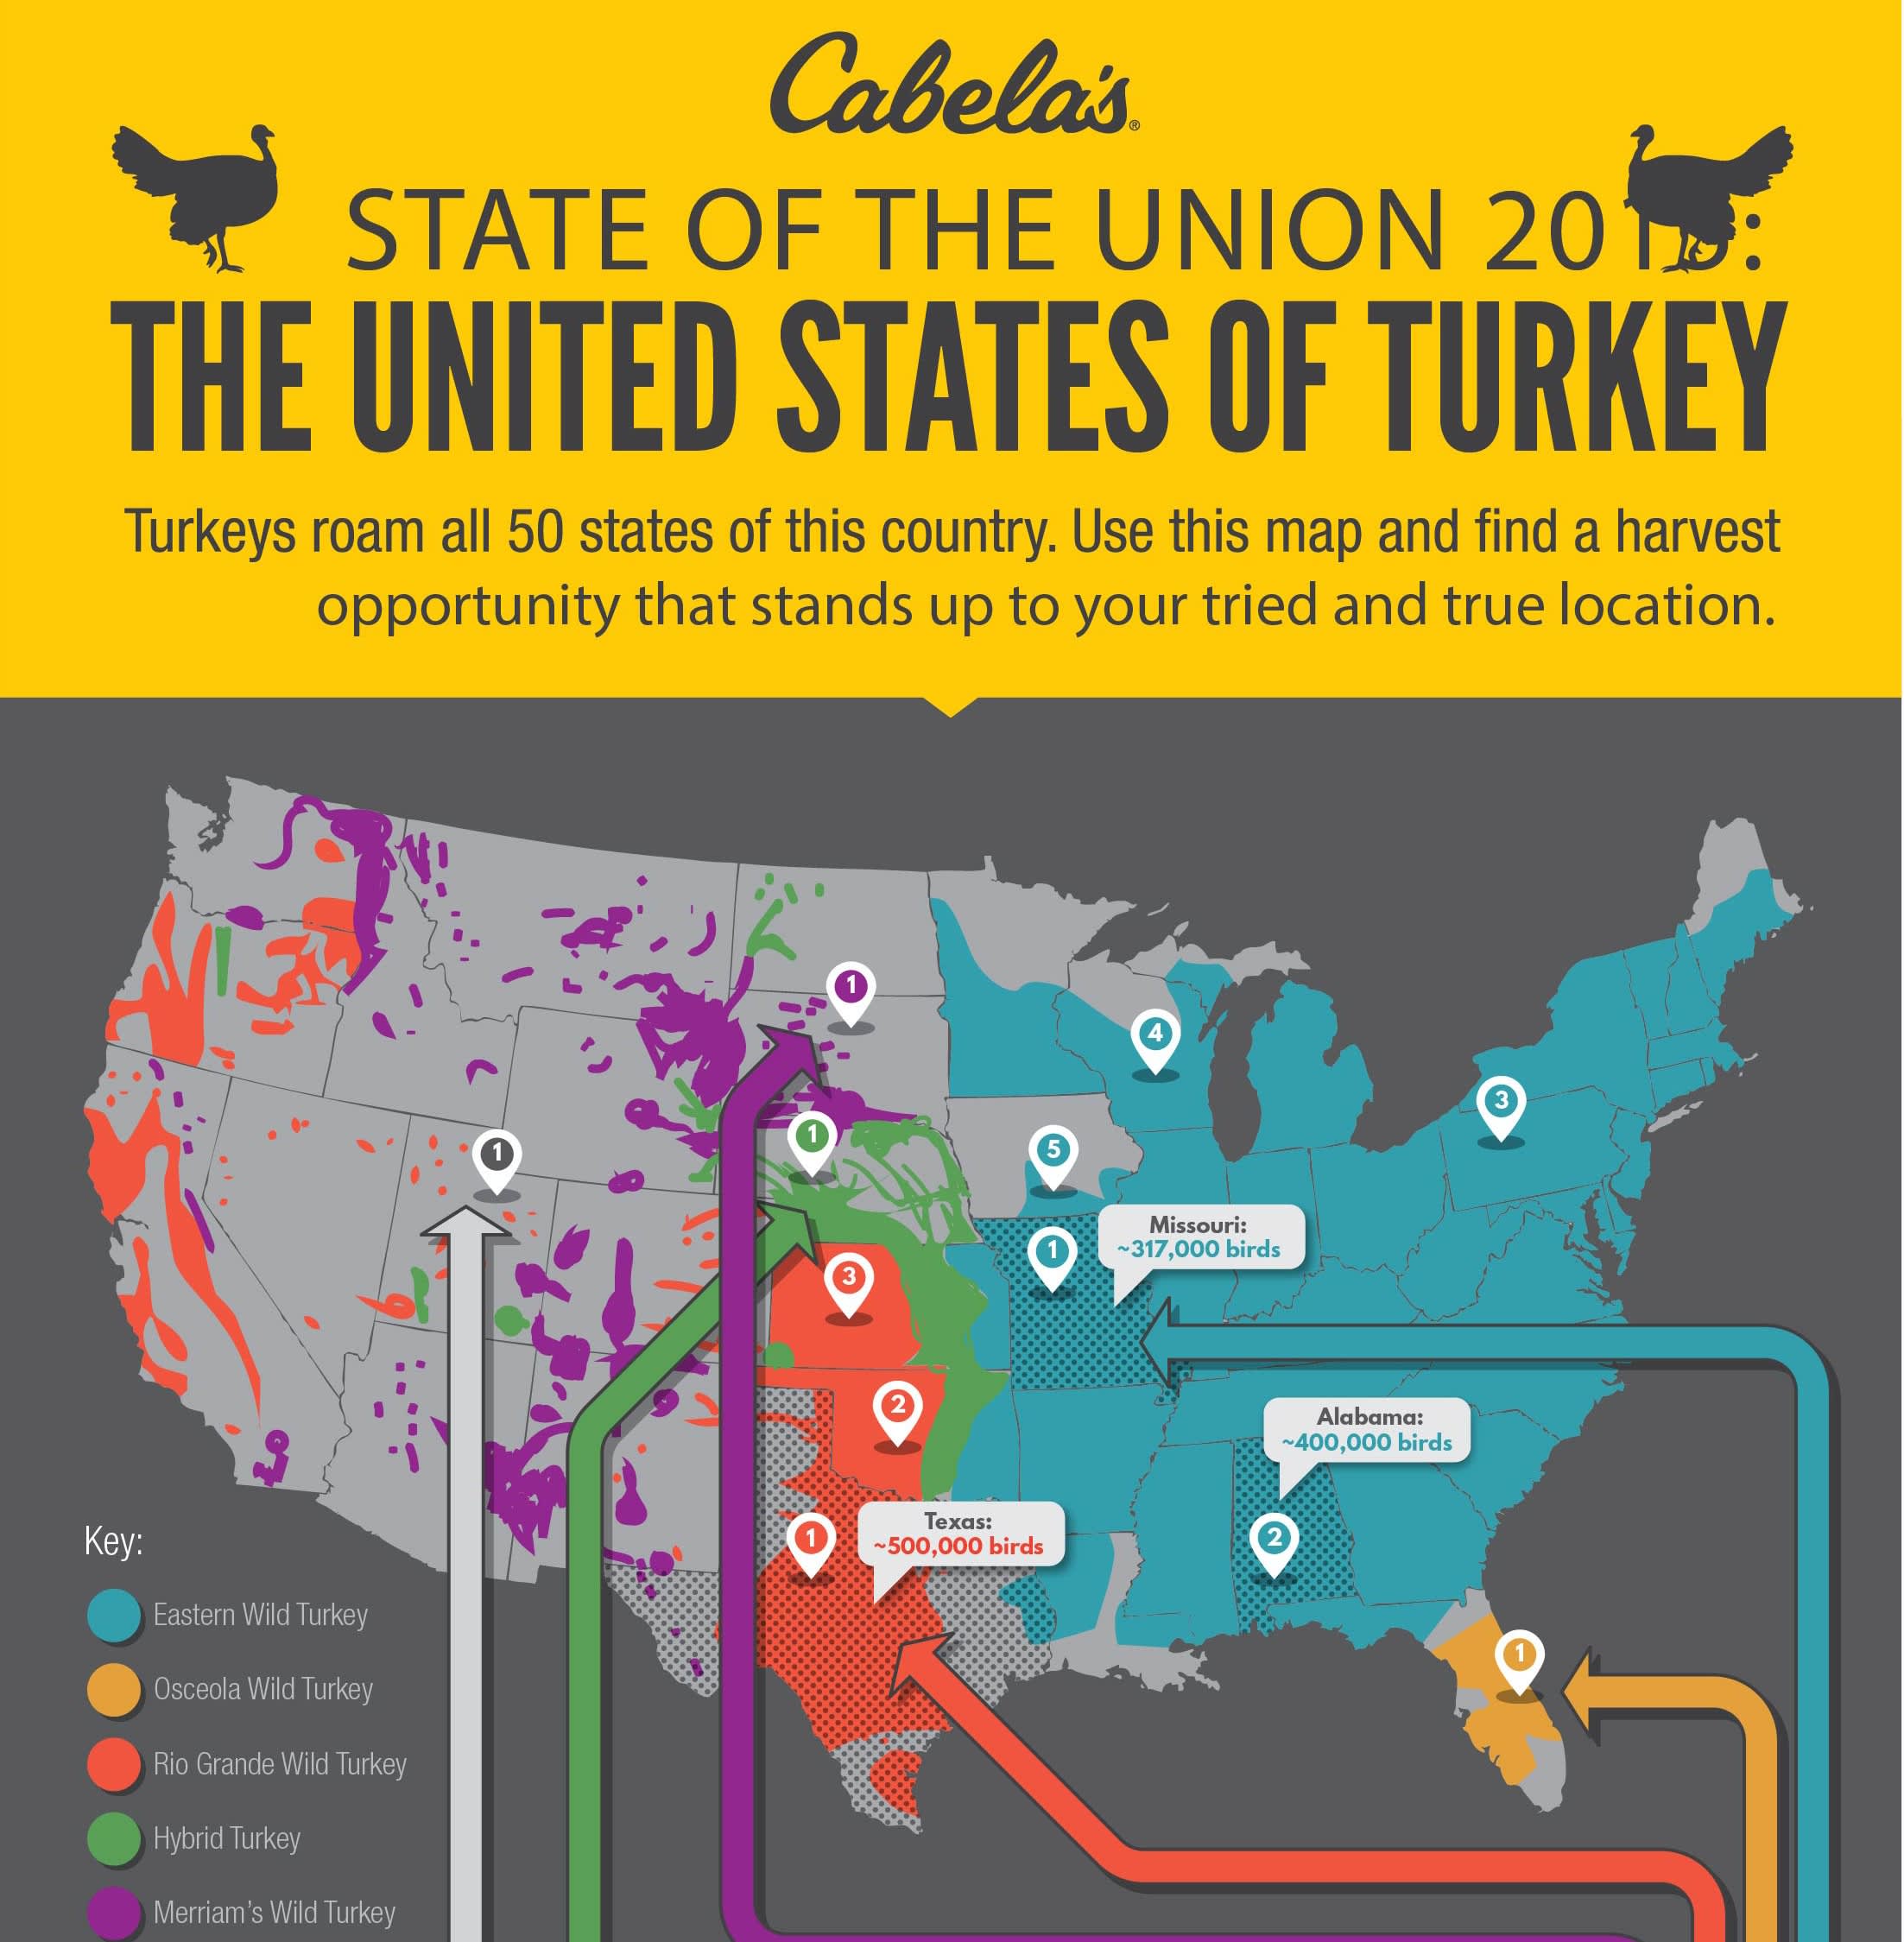 Outdoorhub Infographic United States Turkey Hunting 2015 03 09 17 50 58 